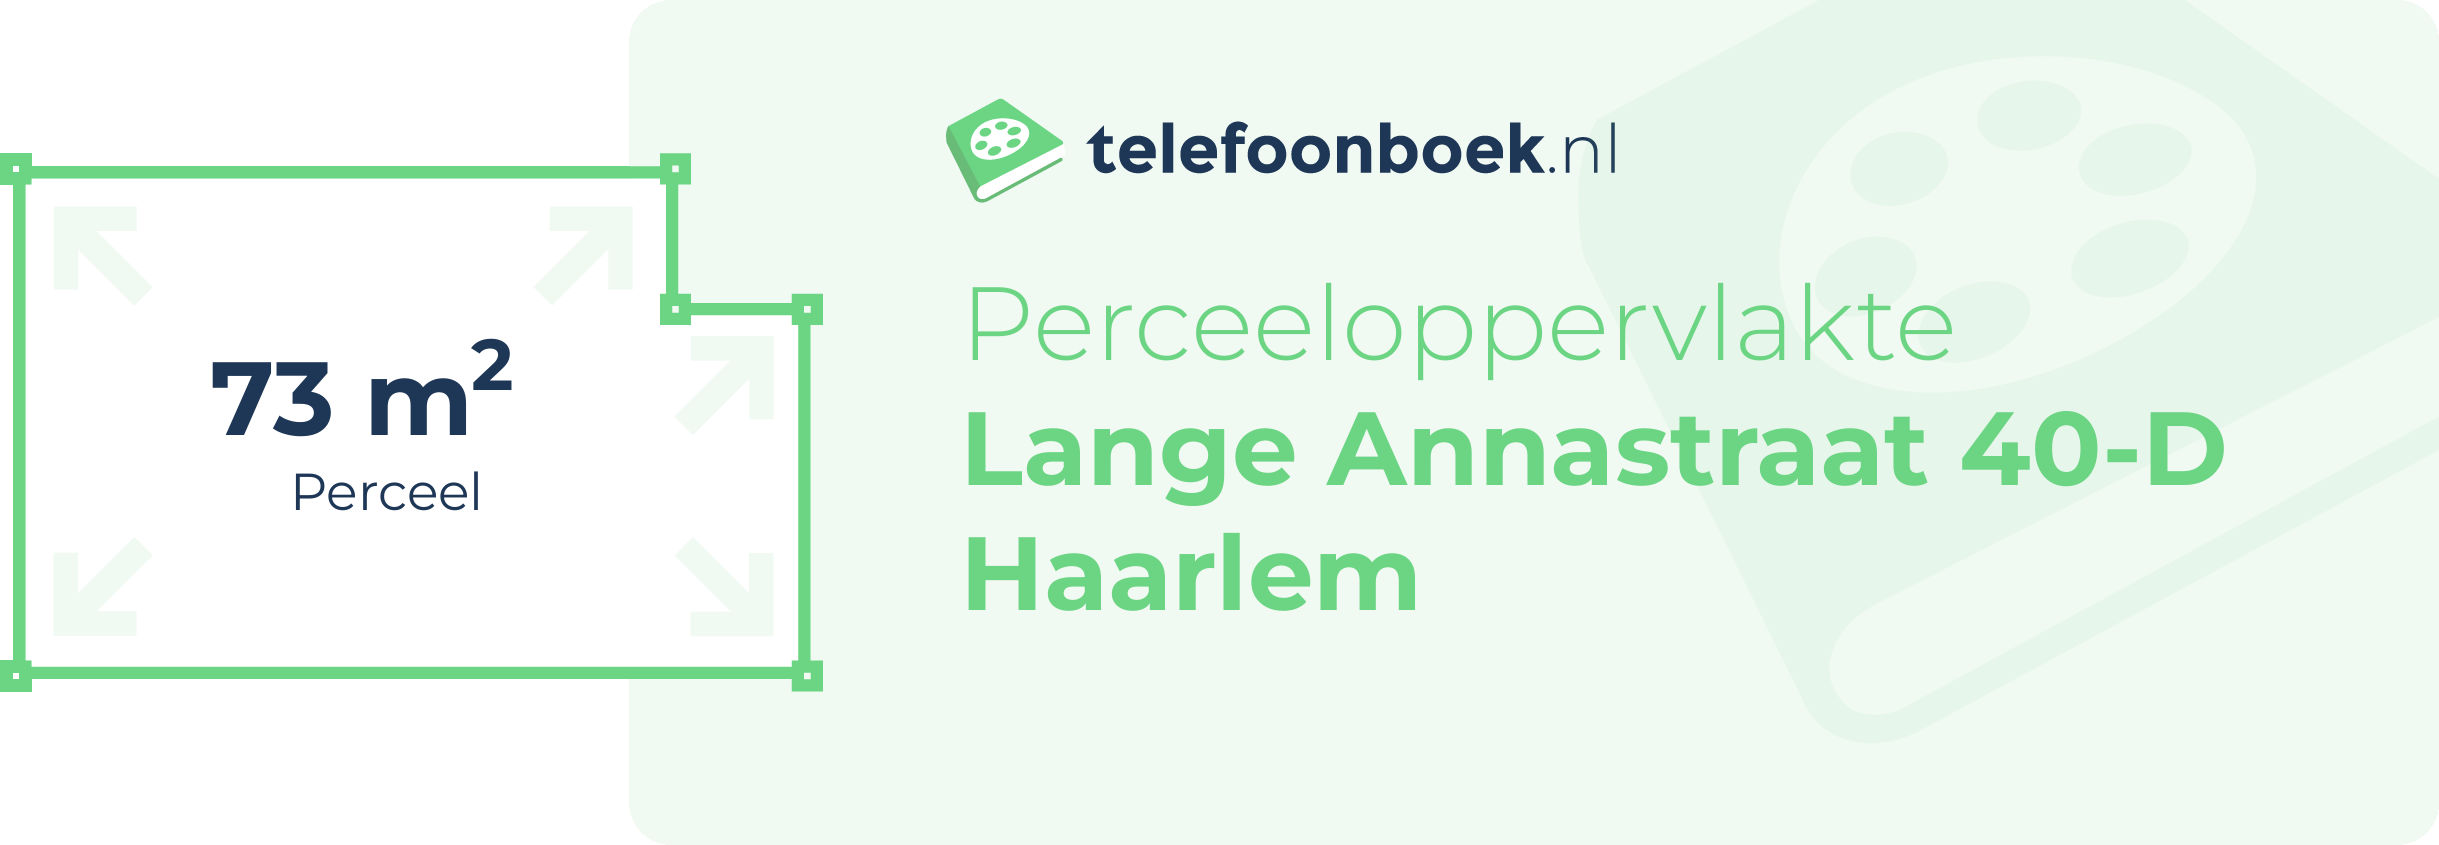 Perceeloppervlakte Lange Annastraat 40-D Haarlem